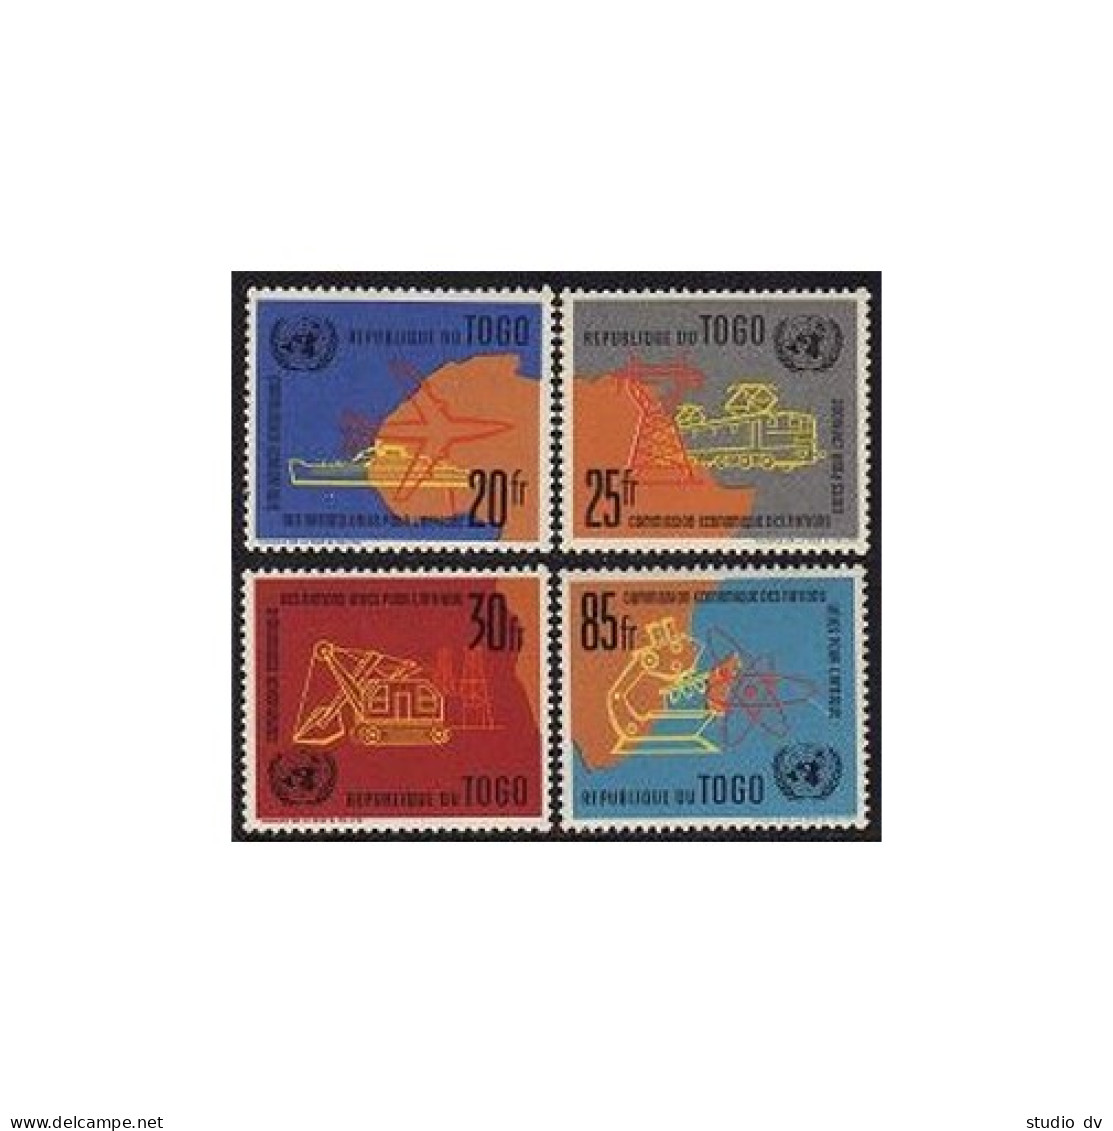 Togo 407-410,410a,MNH.Michel 325-328,Bl.4. UN Economic Commission-Africa,1961. - Togo (1960-...)